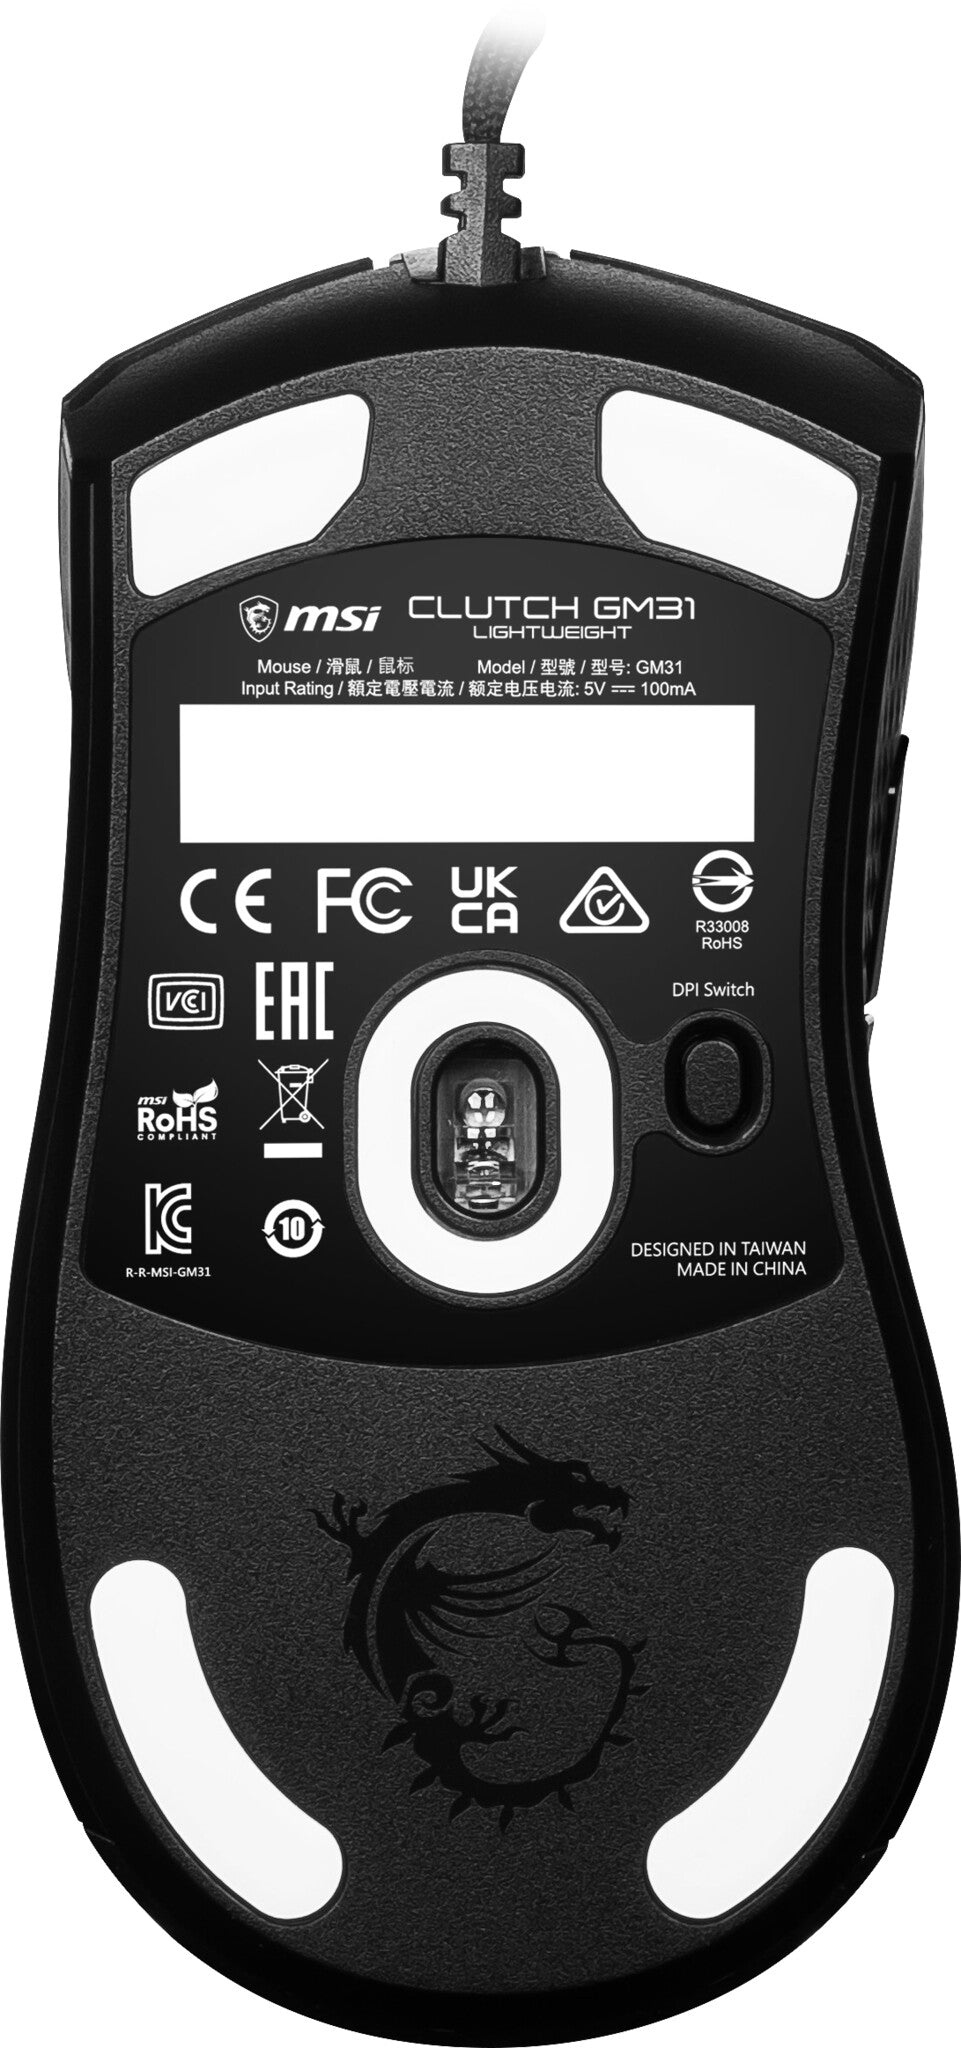 MSI CLUTCH GM31 LIGHTWEIGHT - USB Type-A Optical mouse in Black - 12,000 DPI